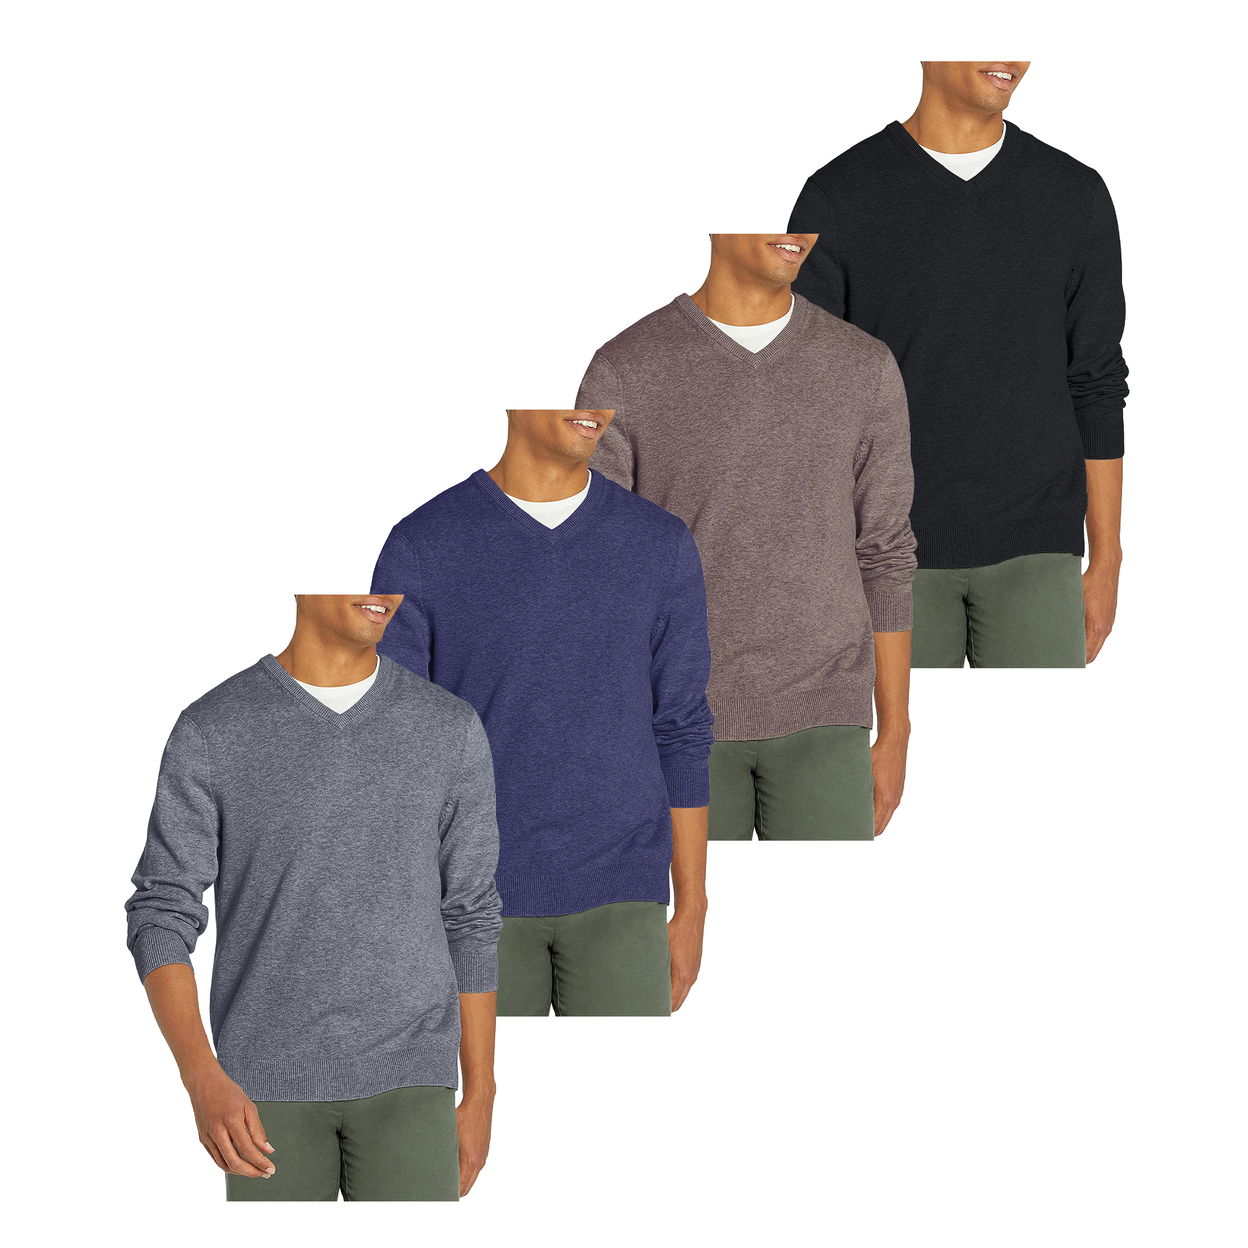 2-Pack: Men's Casual Ultra Soft Slim Fit Warm Knit V-Neck Sweater - Black & Grey, Xx-large